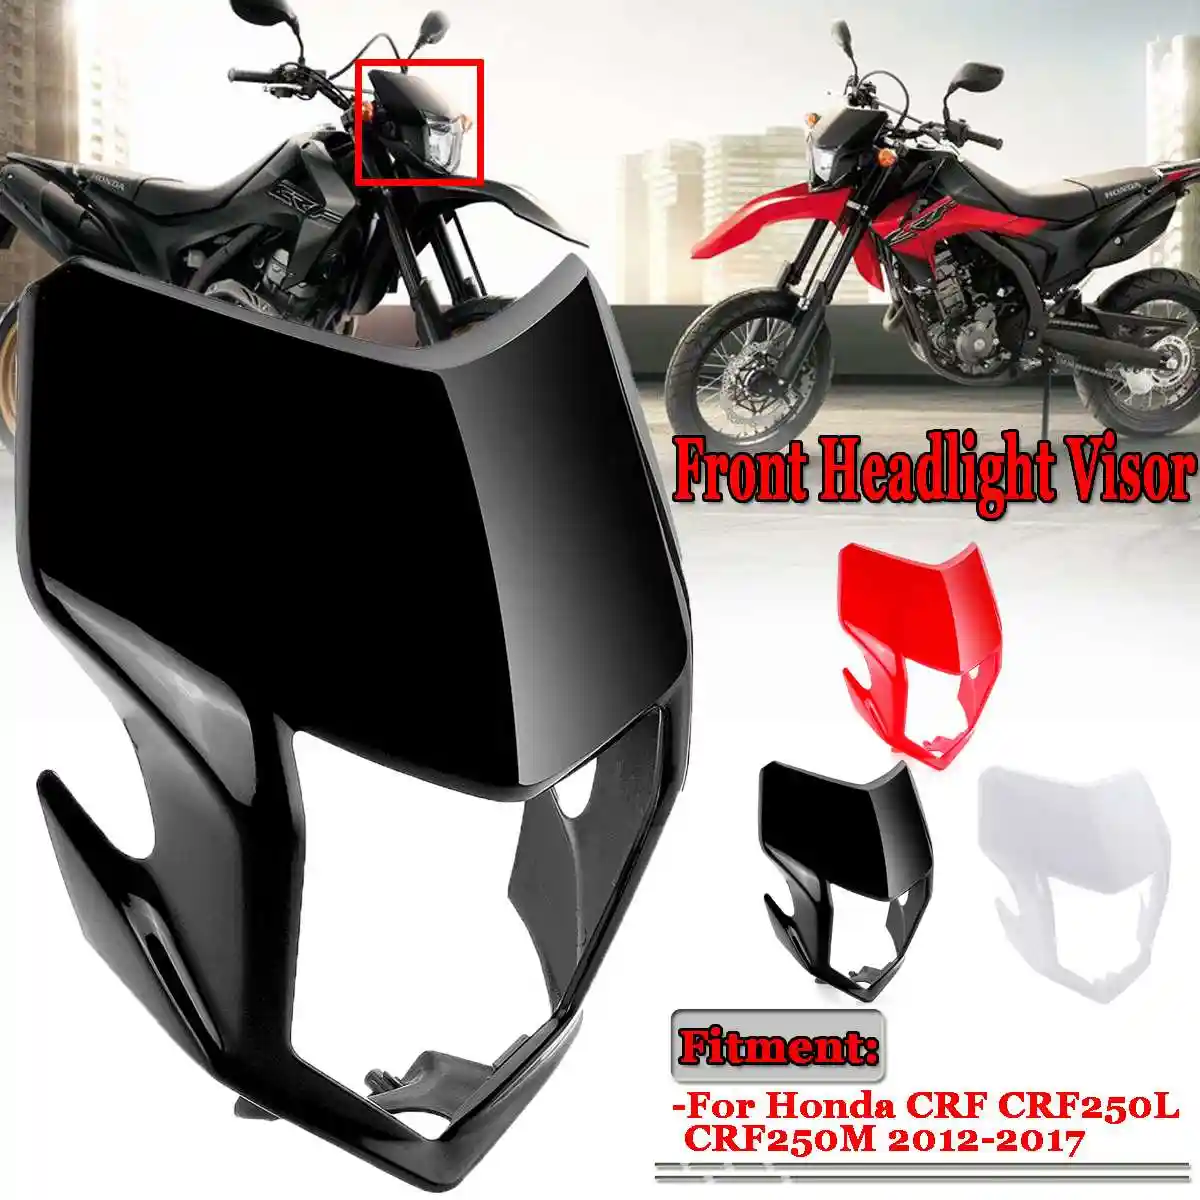 Motorcycle Front Headlight Lamp Visor Fairing Windshield Protective For Honda Crf Crf250l Crf250m 12 17 Aliexpress